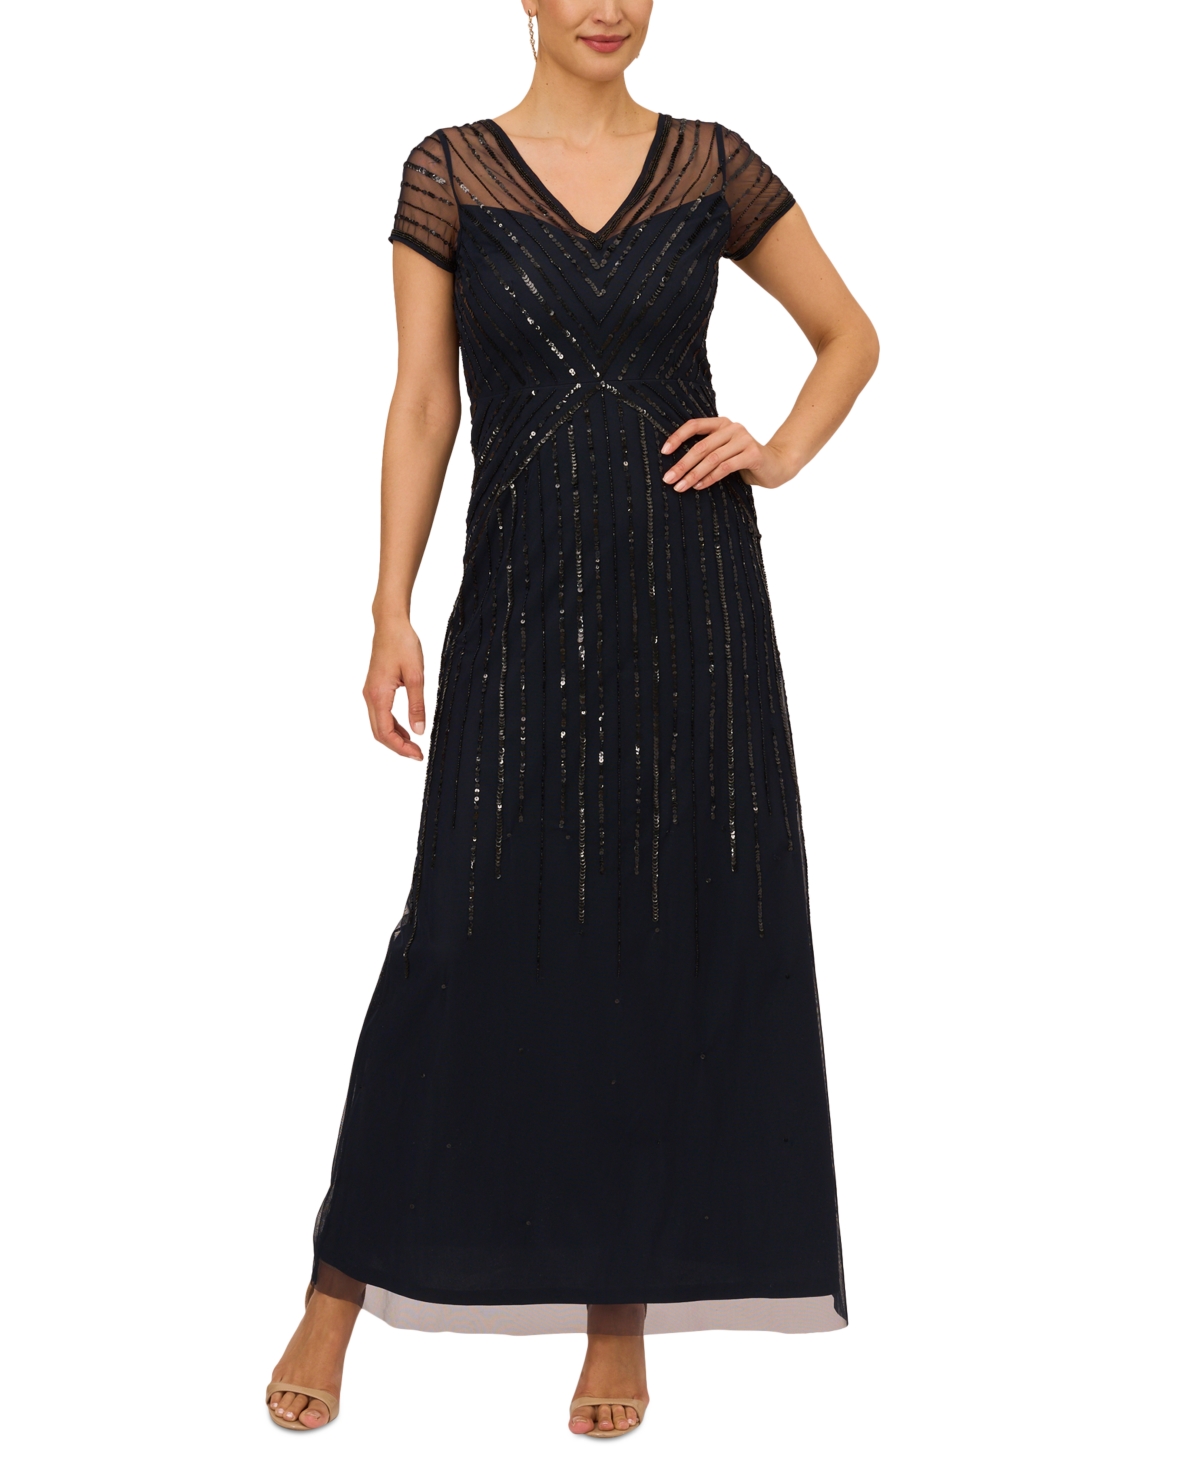 Downton Abbey Inspired Dresses Papell Studio Womens V-Neck Short-Sleeve Sequin Gown - MidnightBlack $159.00 AT vintagedancer.com